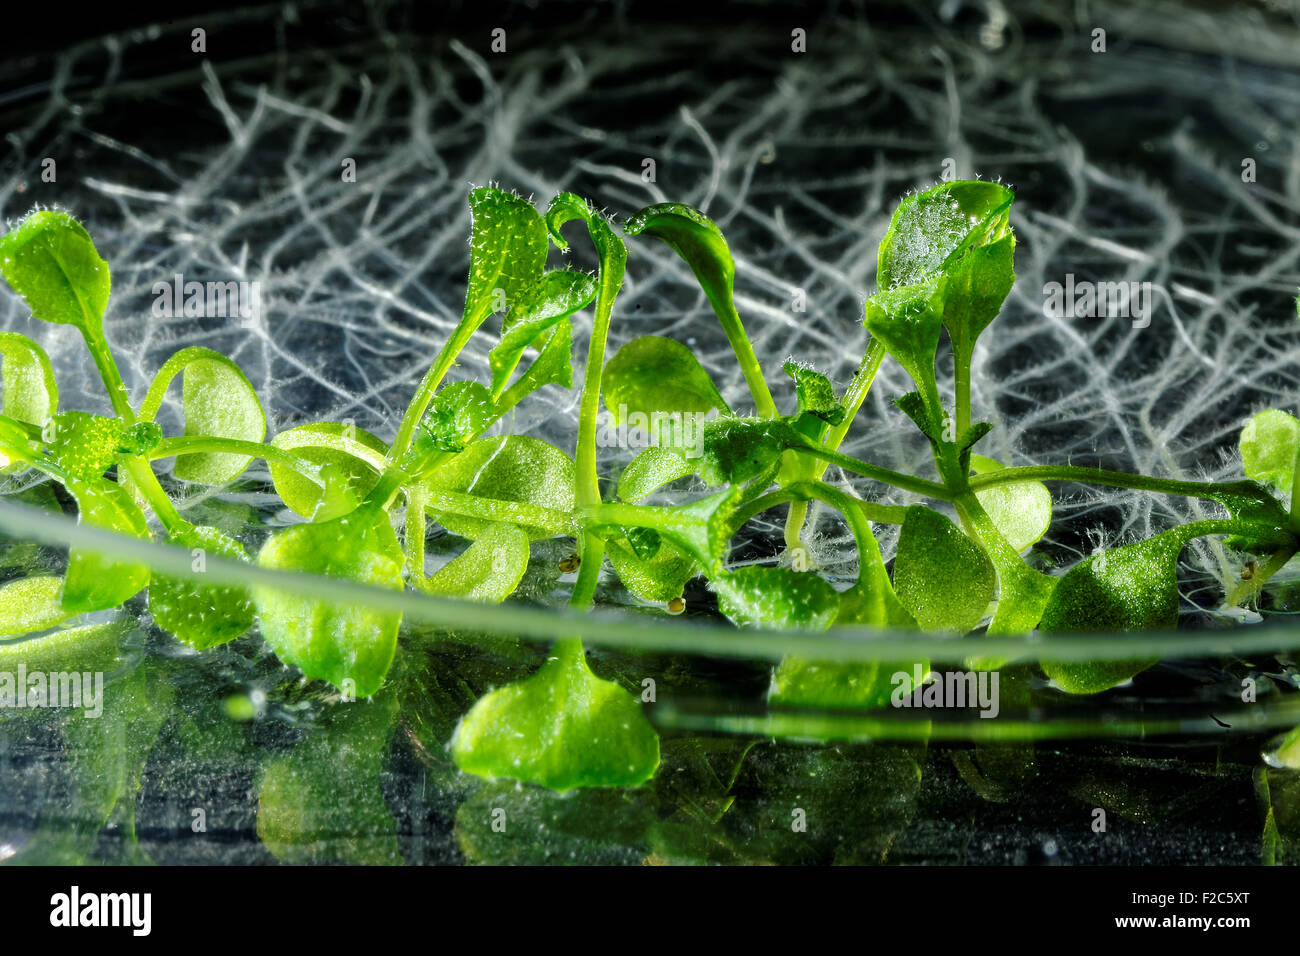 Thale cress (Arabidopsis thaliana) plants growing on a Petri dish. Stock Photo